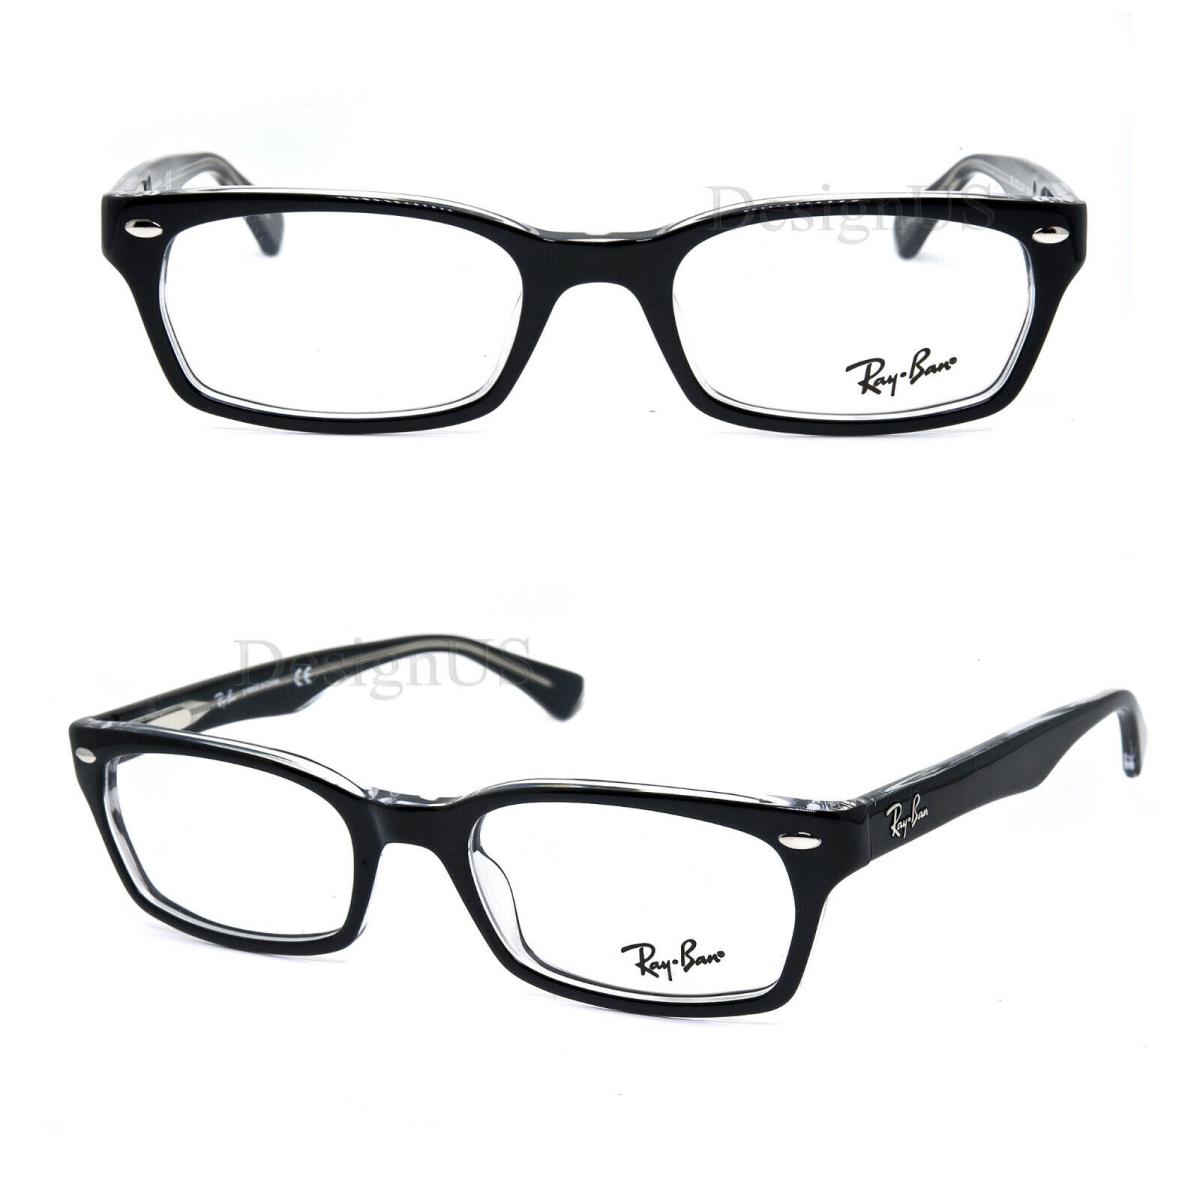 Ray-ban Ray Ban RB 5114 2034 Black on Clear Small 50/19/135 Eyeglasses